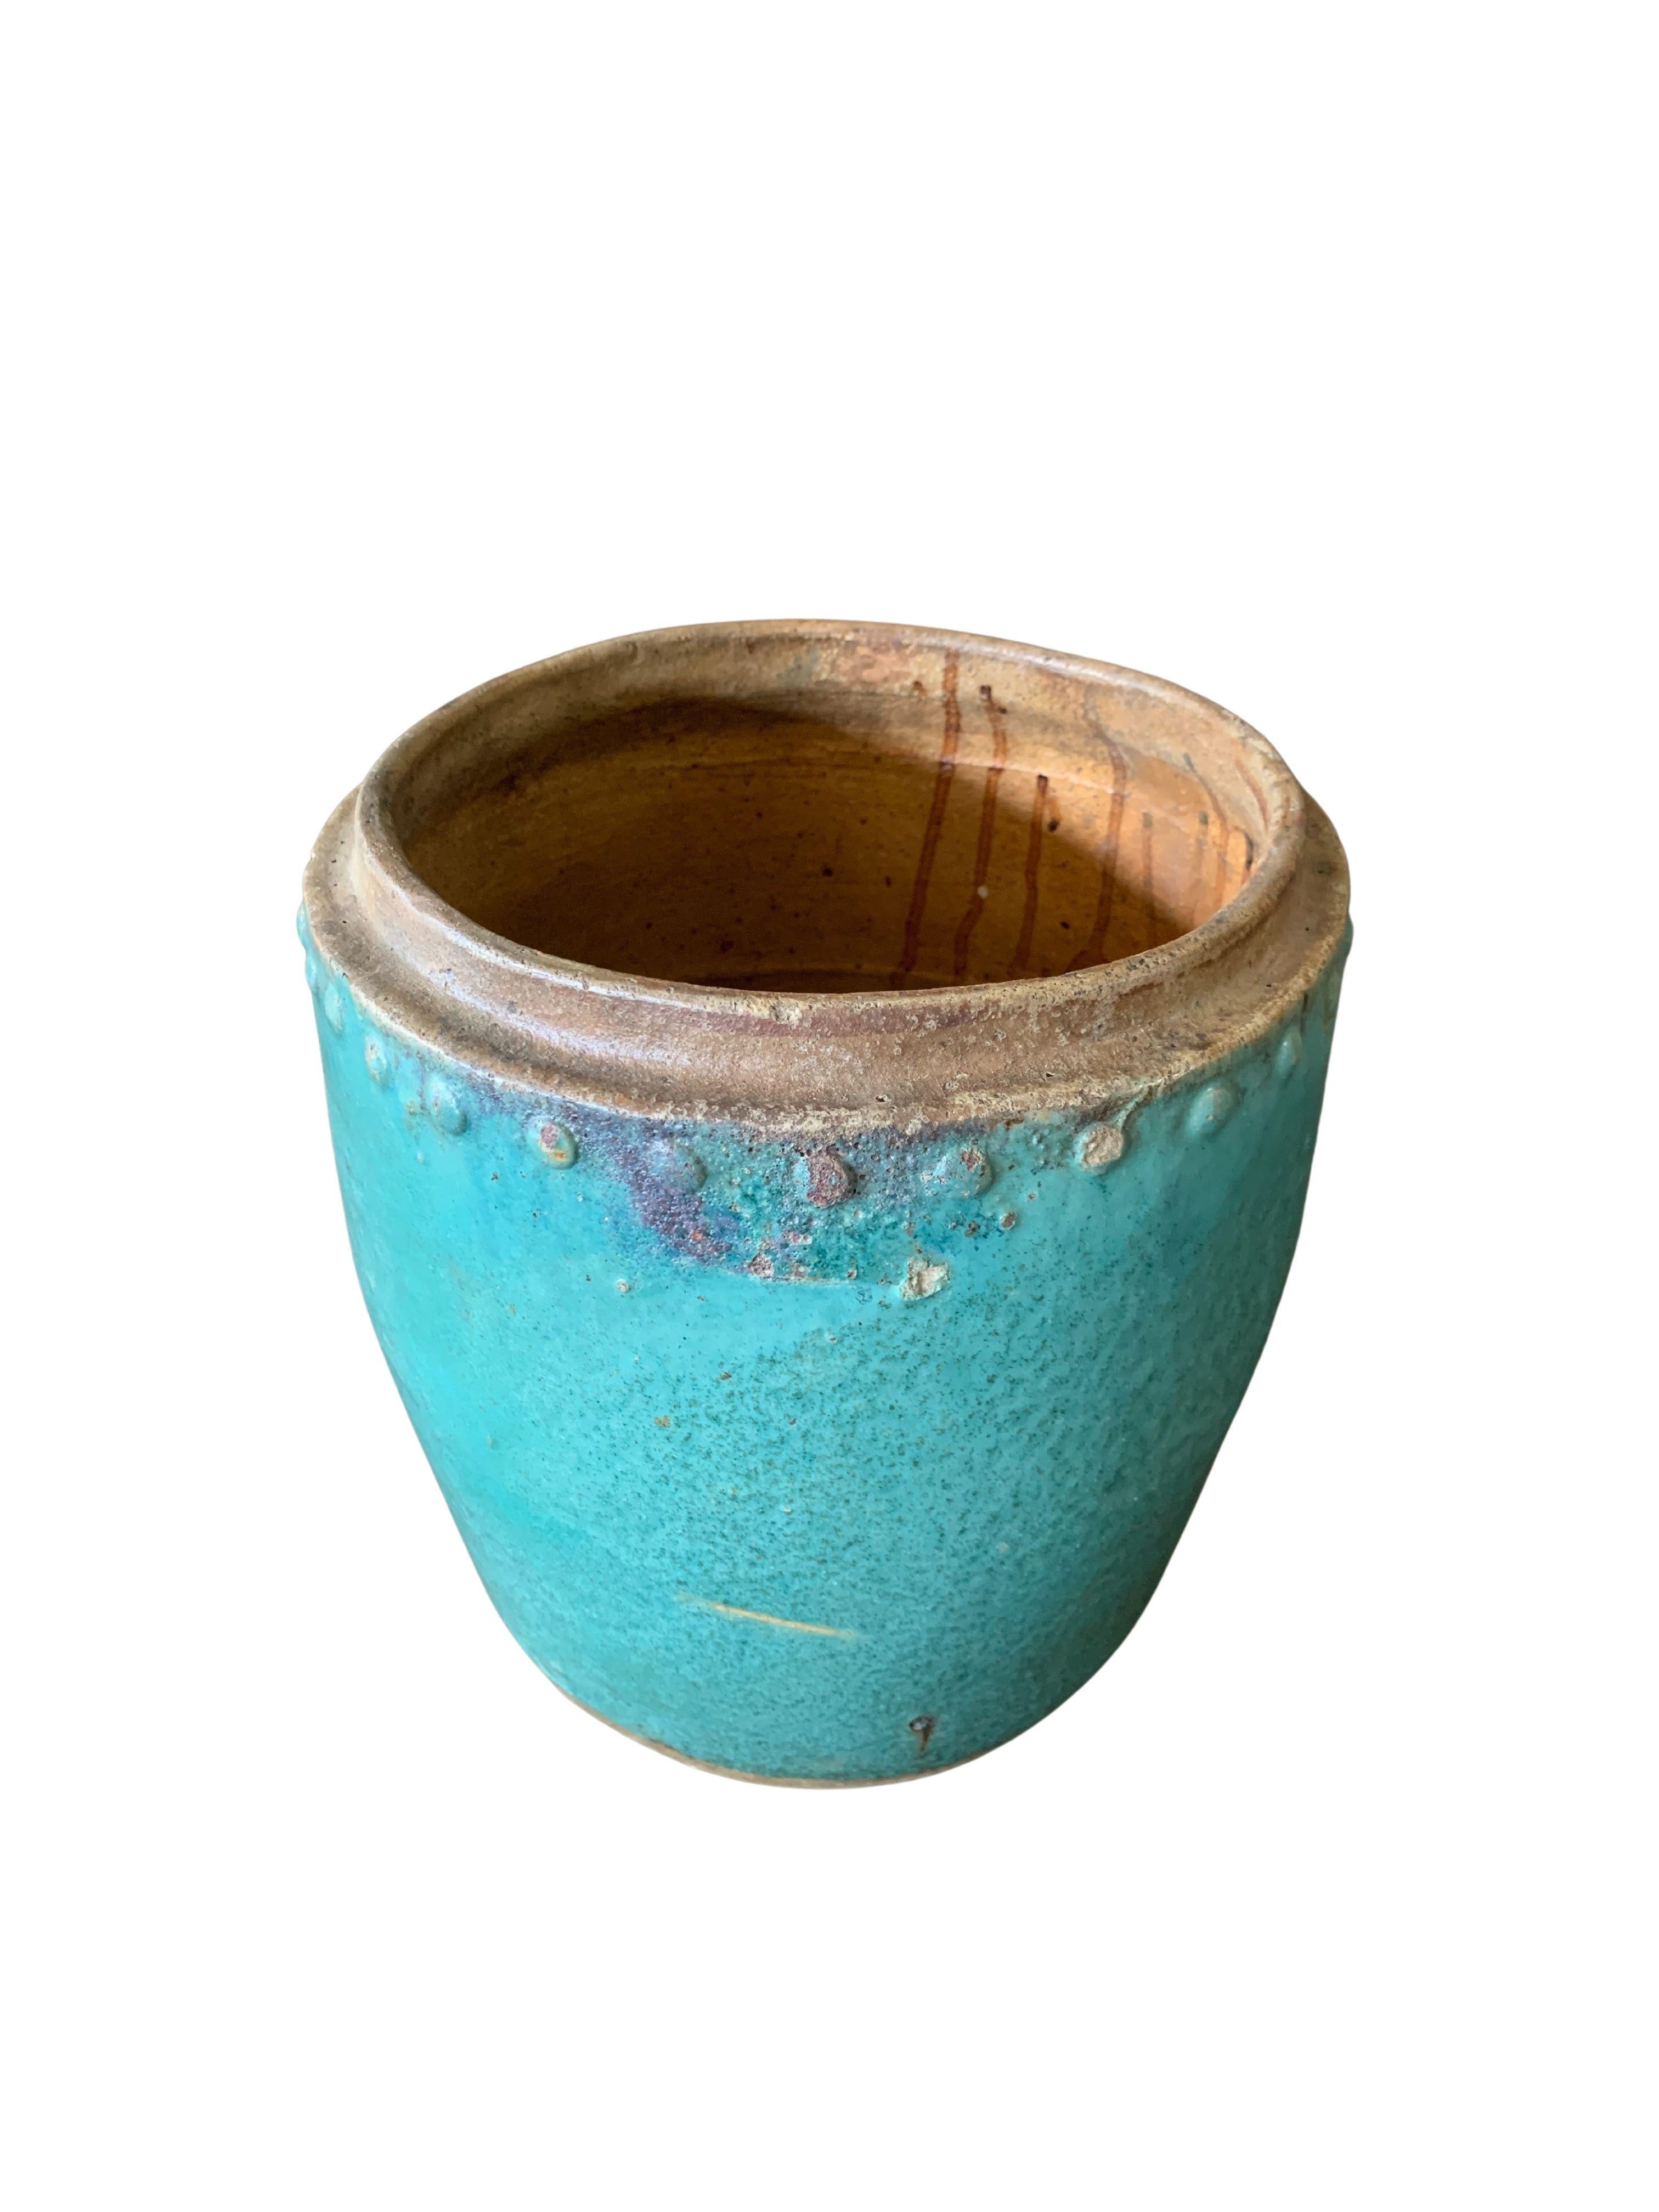 Chinese Shiwan Green & Blue Glazed Ceramic Jar / Planter, c. 1900 In Good Condition For Sale In Jimbaran, Bali